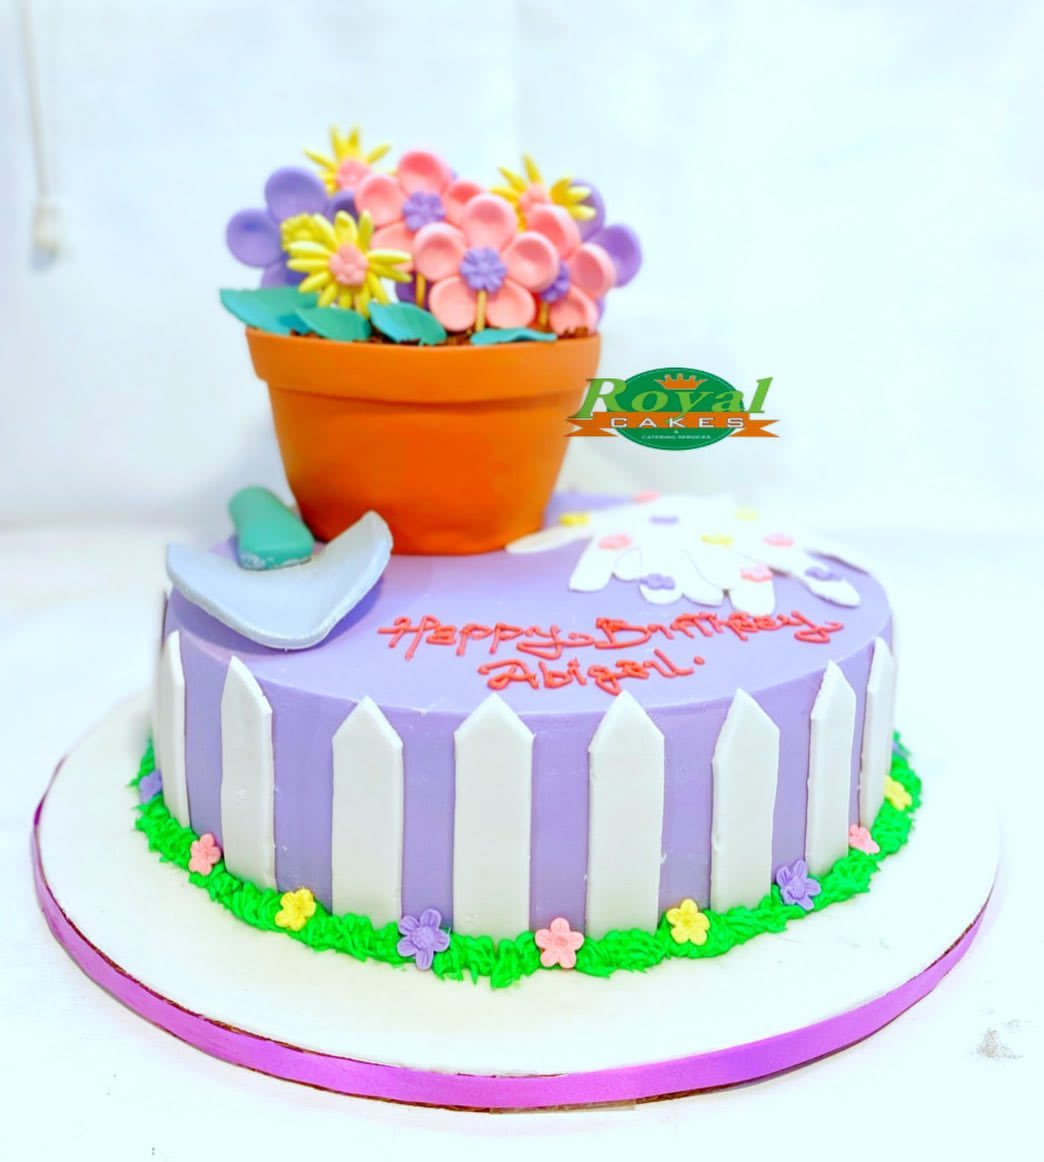 Louis Vuitton birthday cake 💗. - Nissi's Cake Room LLC